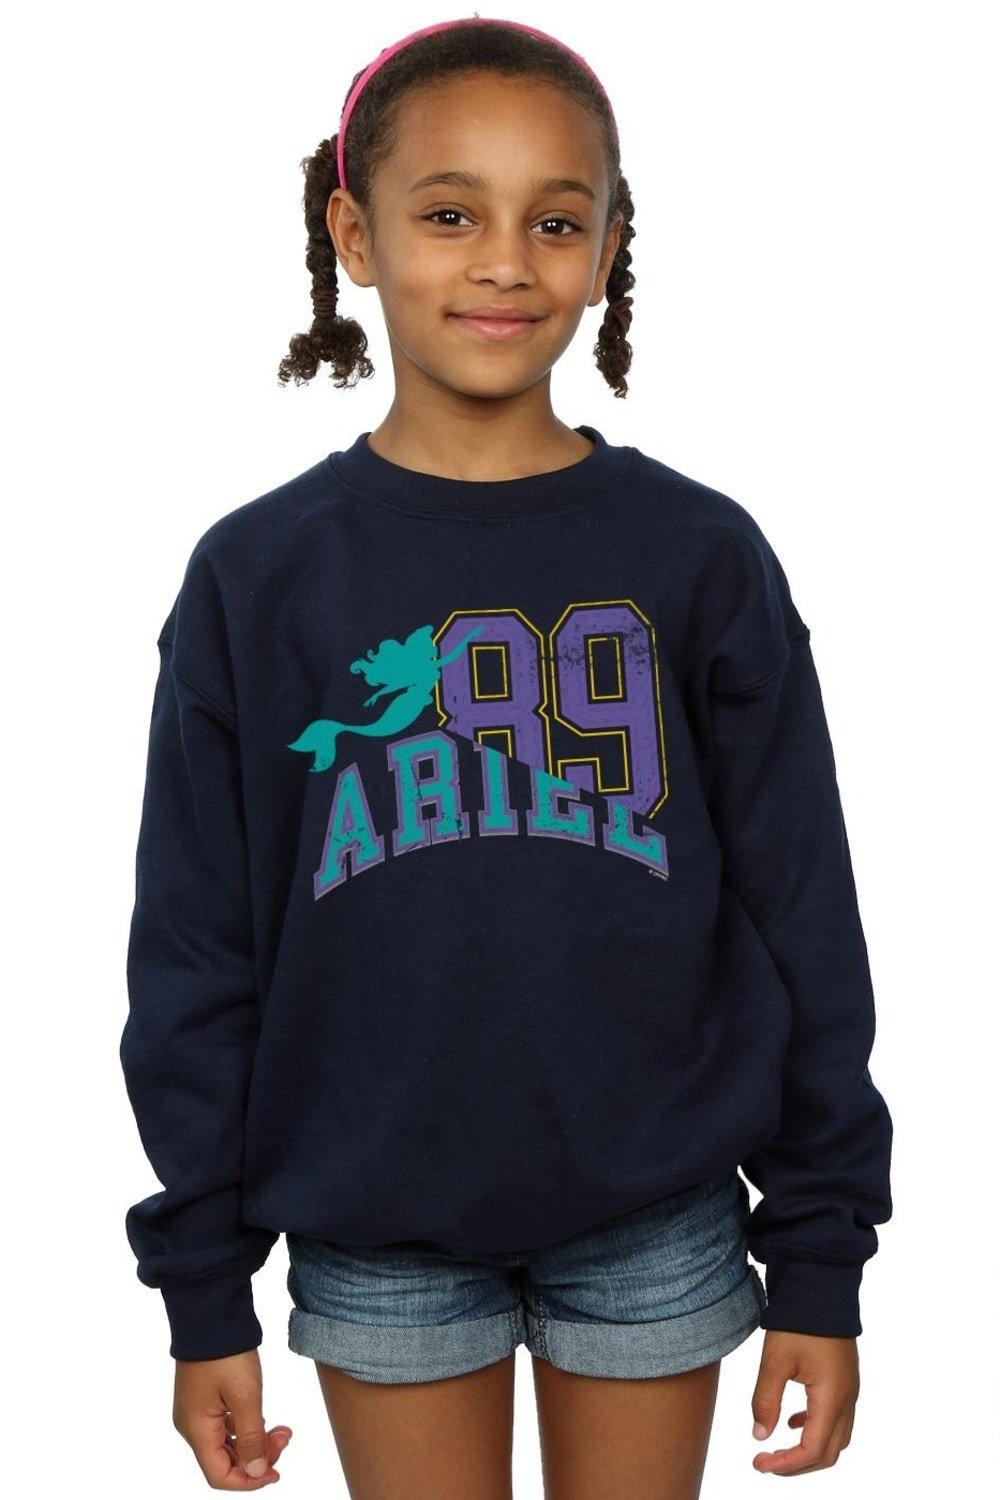 Princess Ariel Collegiate Sweatshirt